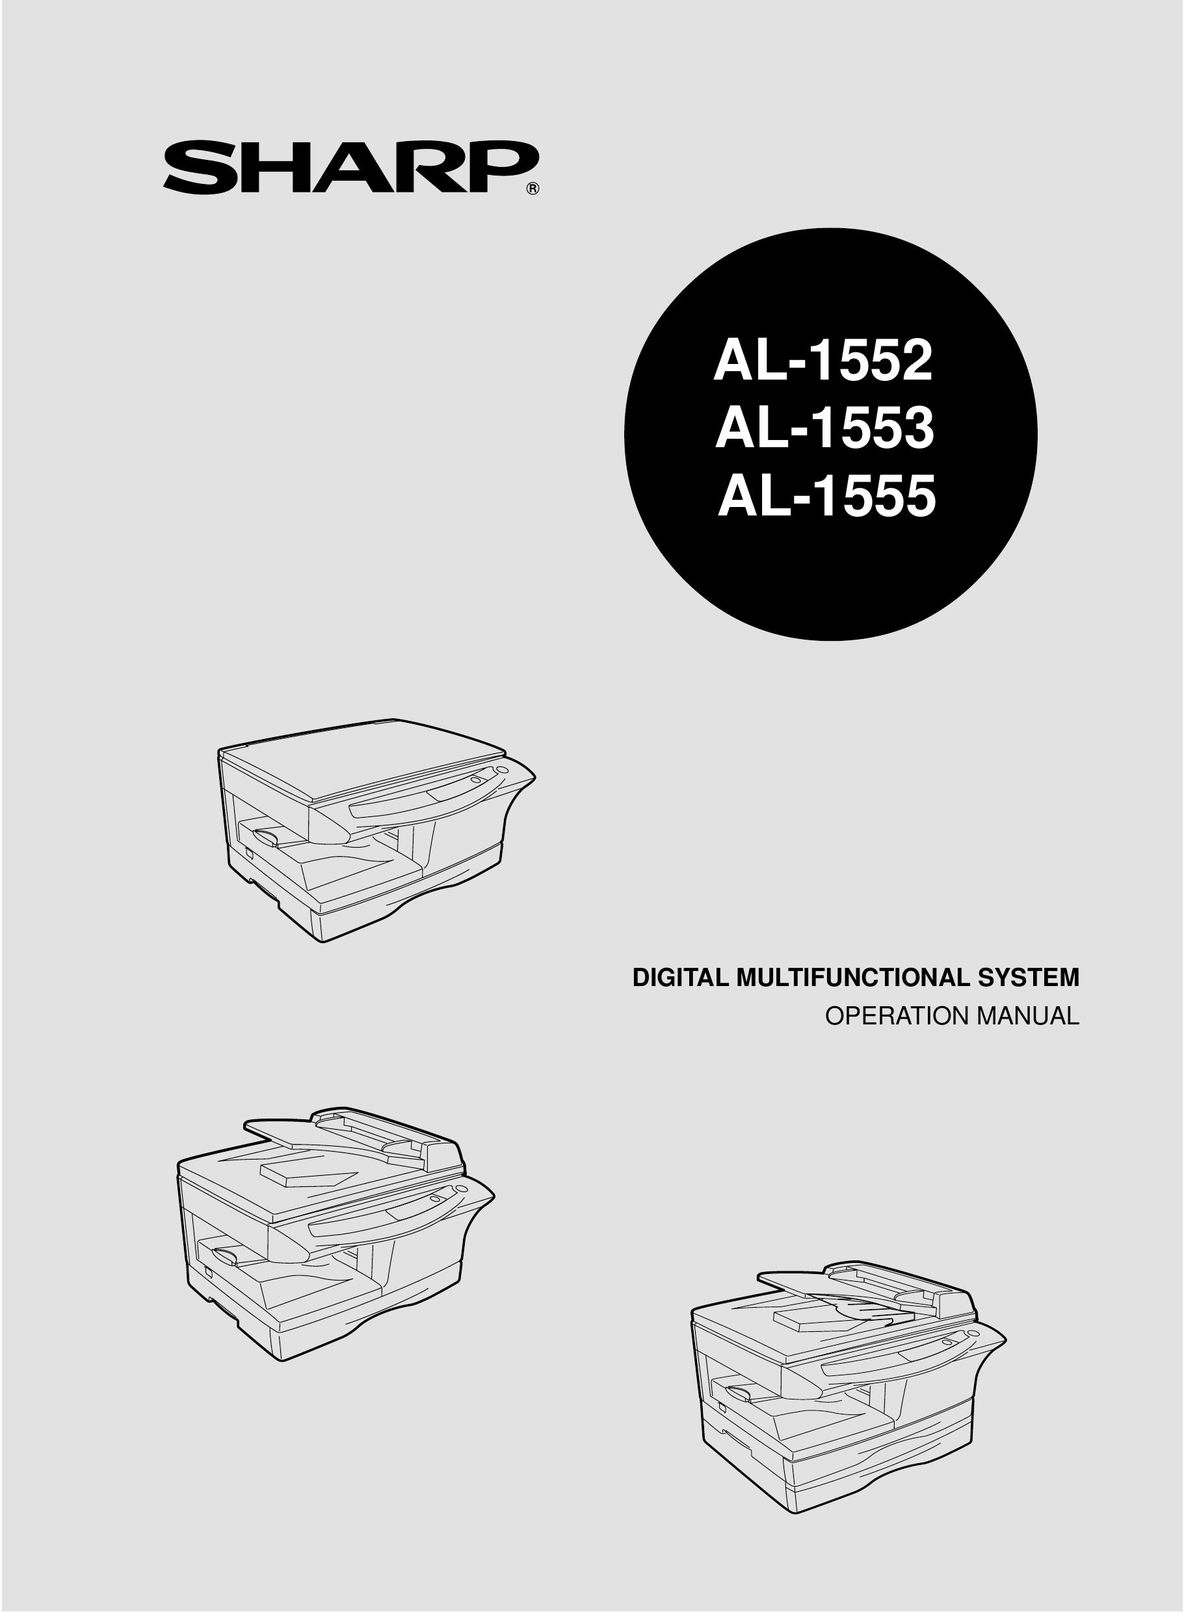 Sharp AL-1555 All in One Printer User Manual